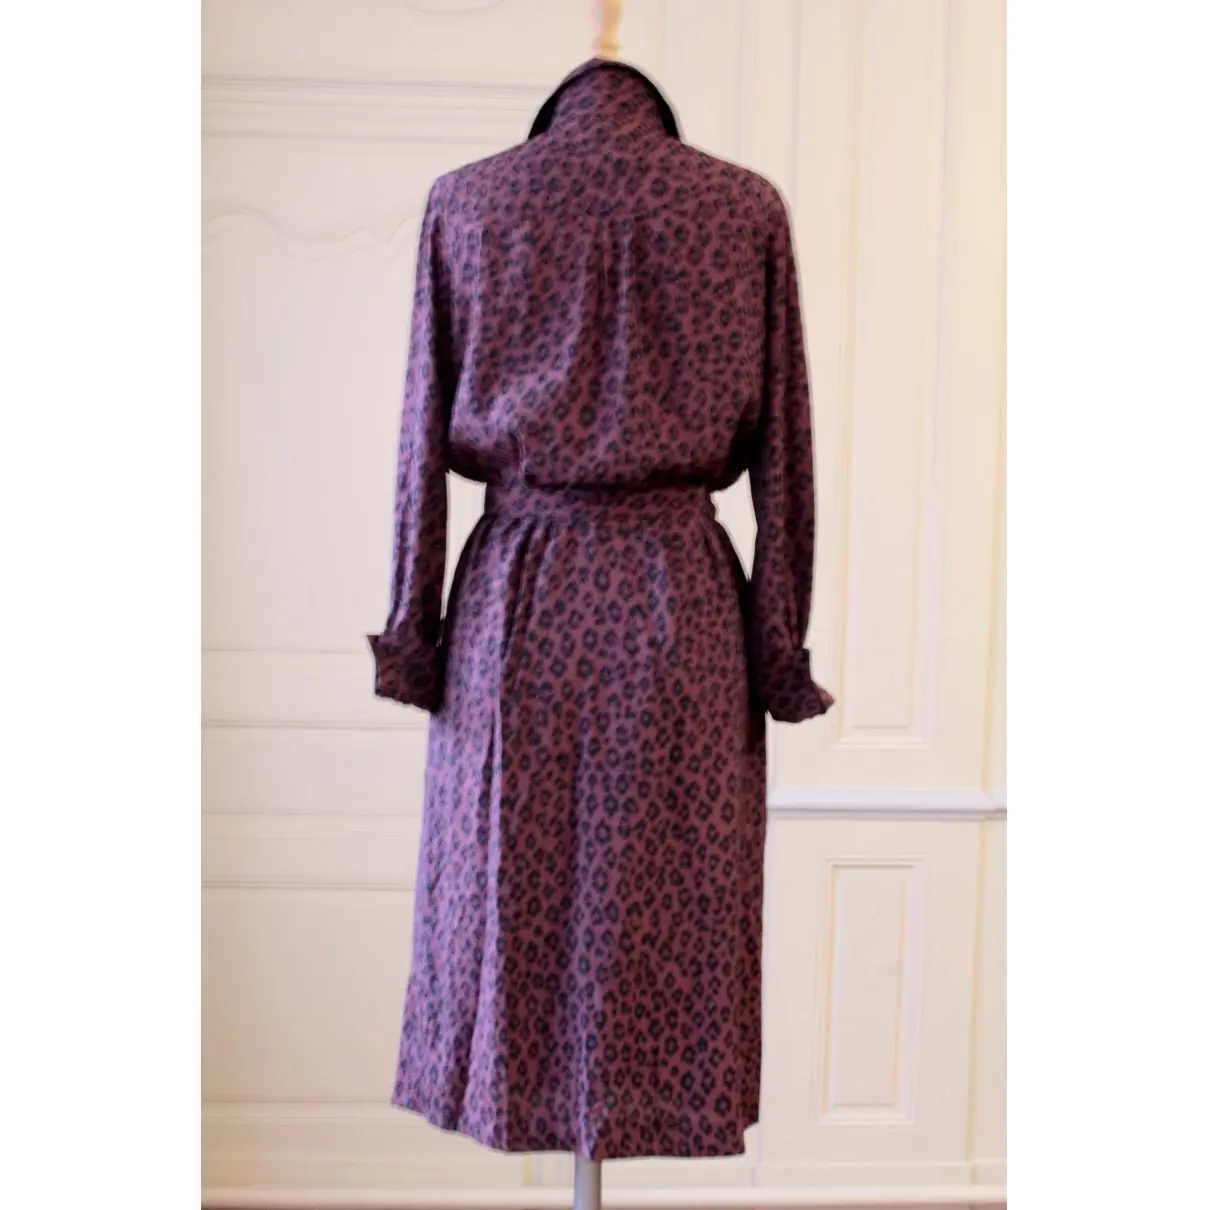 Buy APC Mid-length dress online